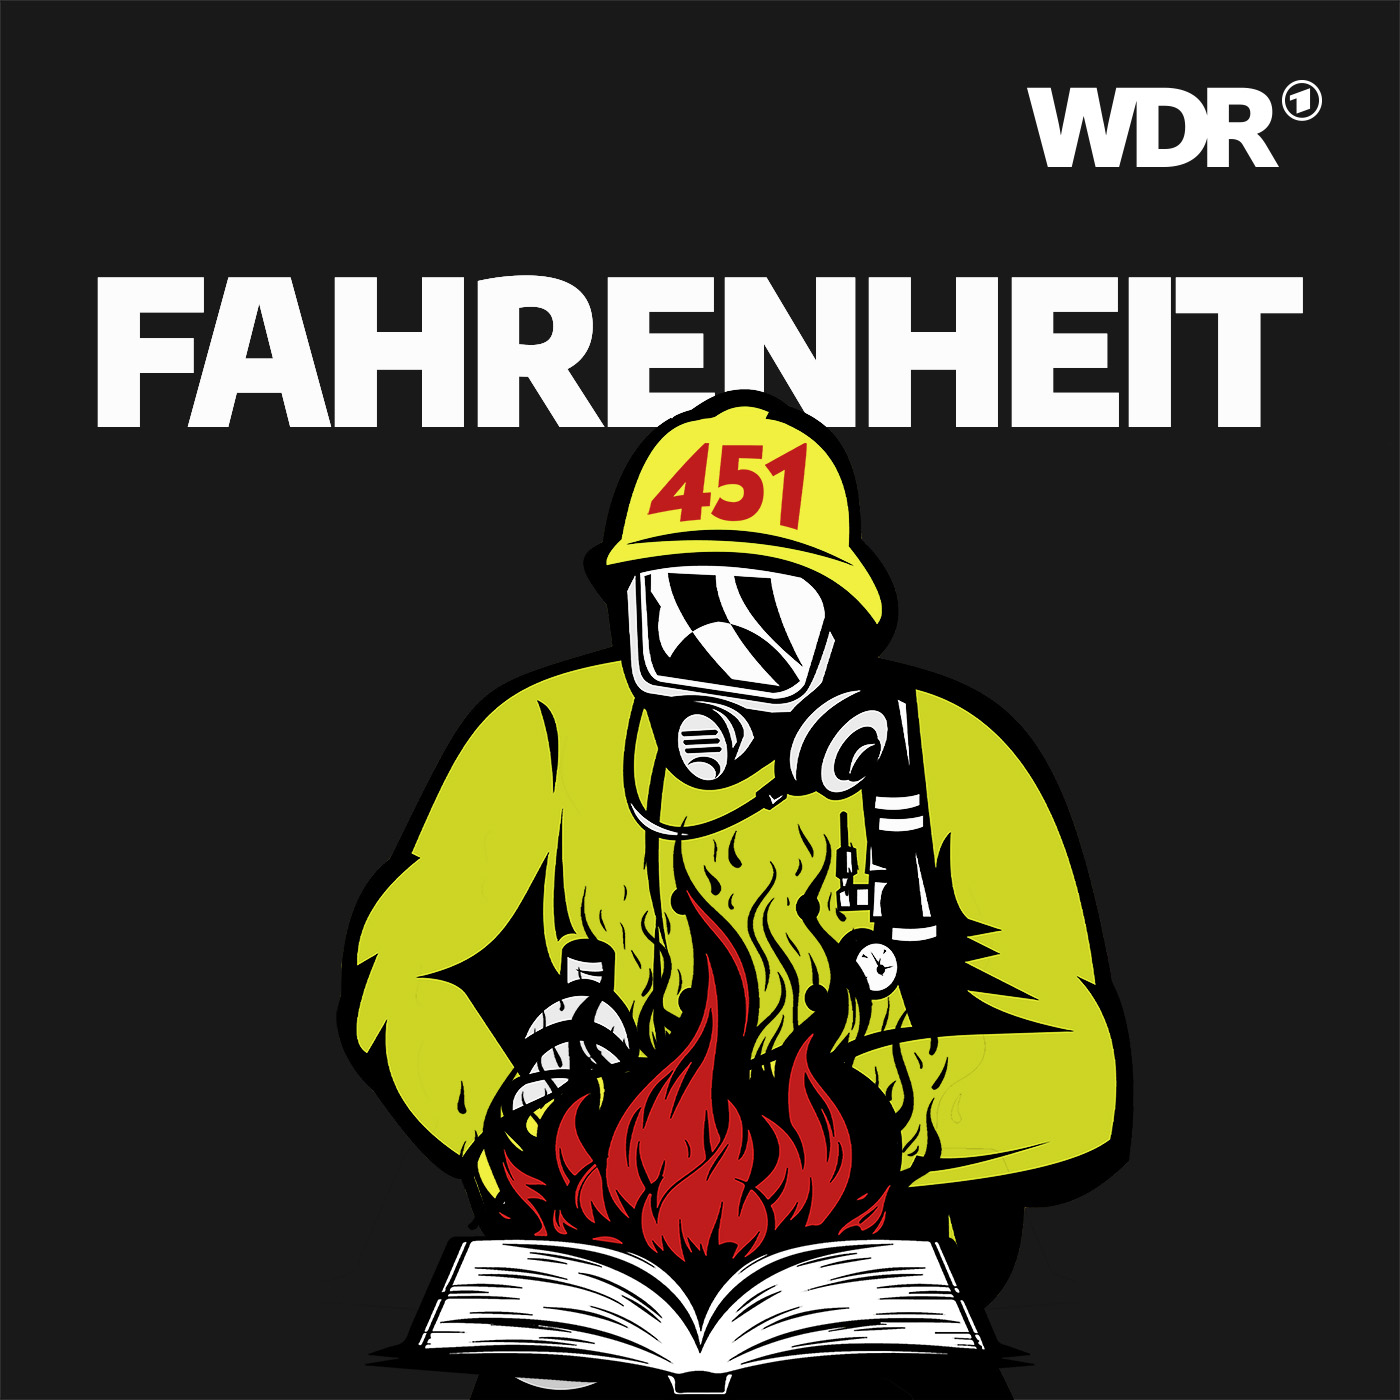 Fahrenheit 451 (1/5): SciFi-Klassiker nach Ray Bradbury